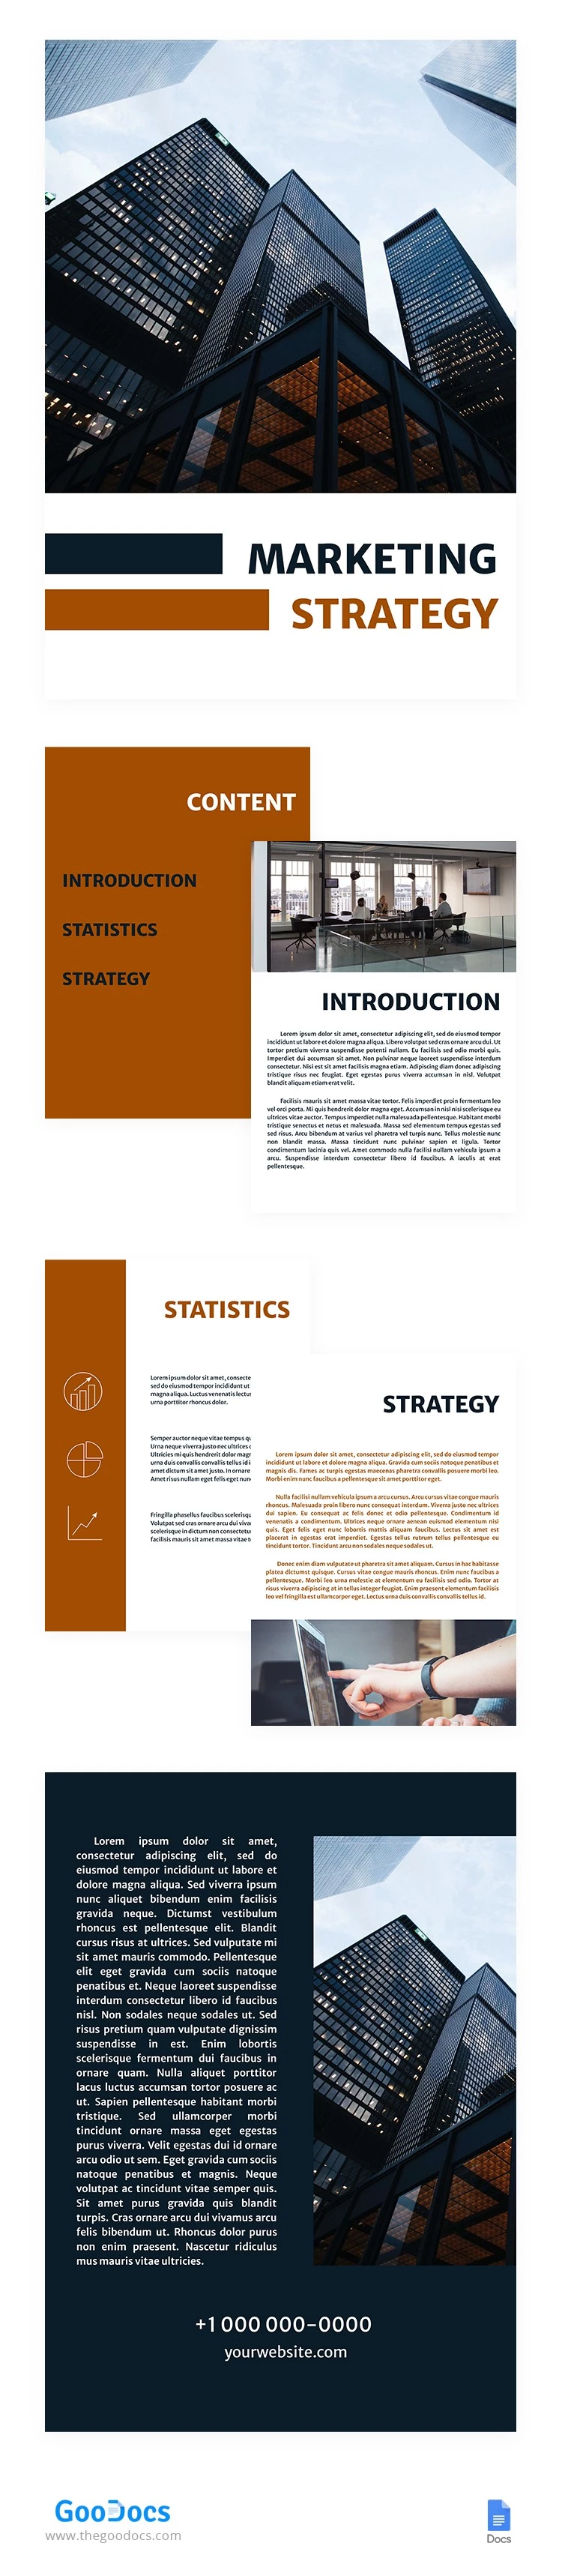 Neues Buch über Marketingstrategien - free Google Docs Template - 10062690